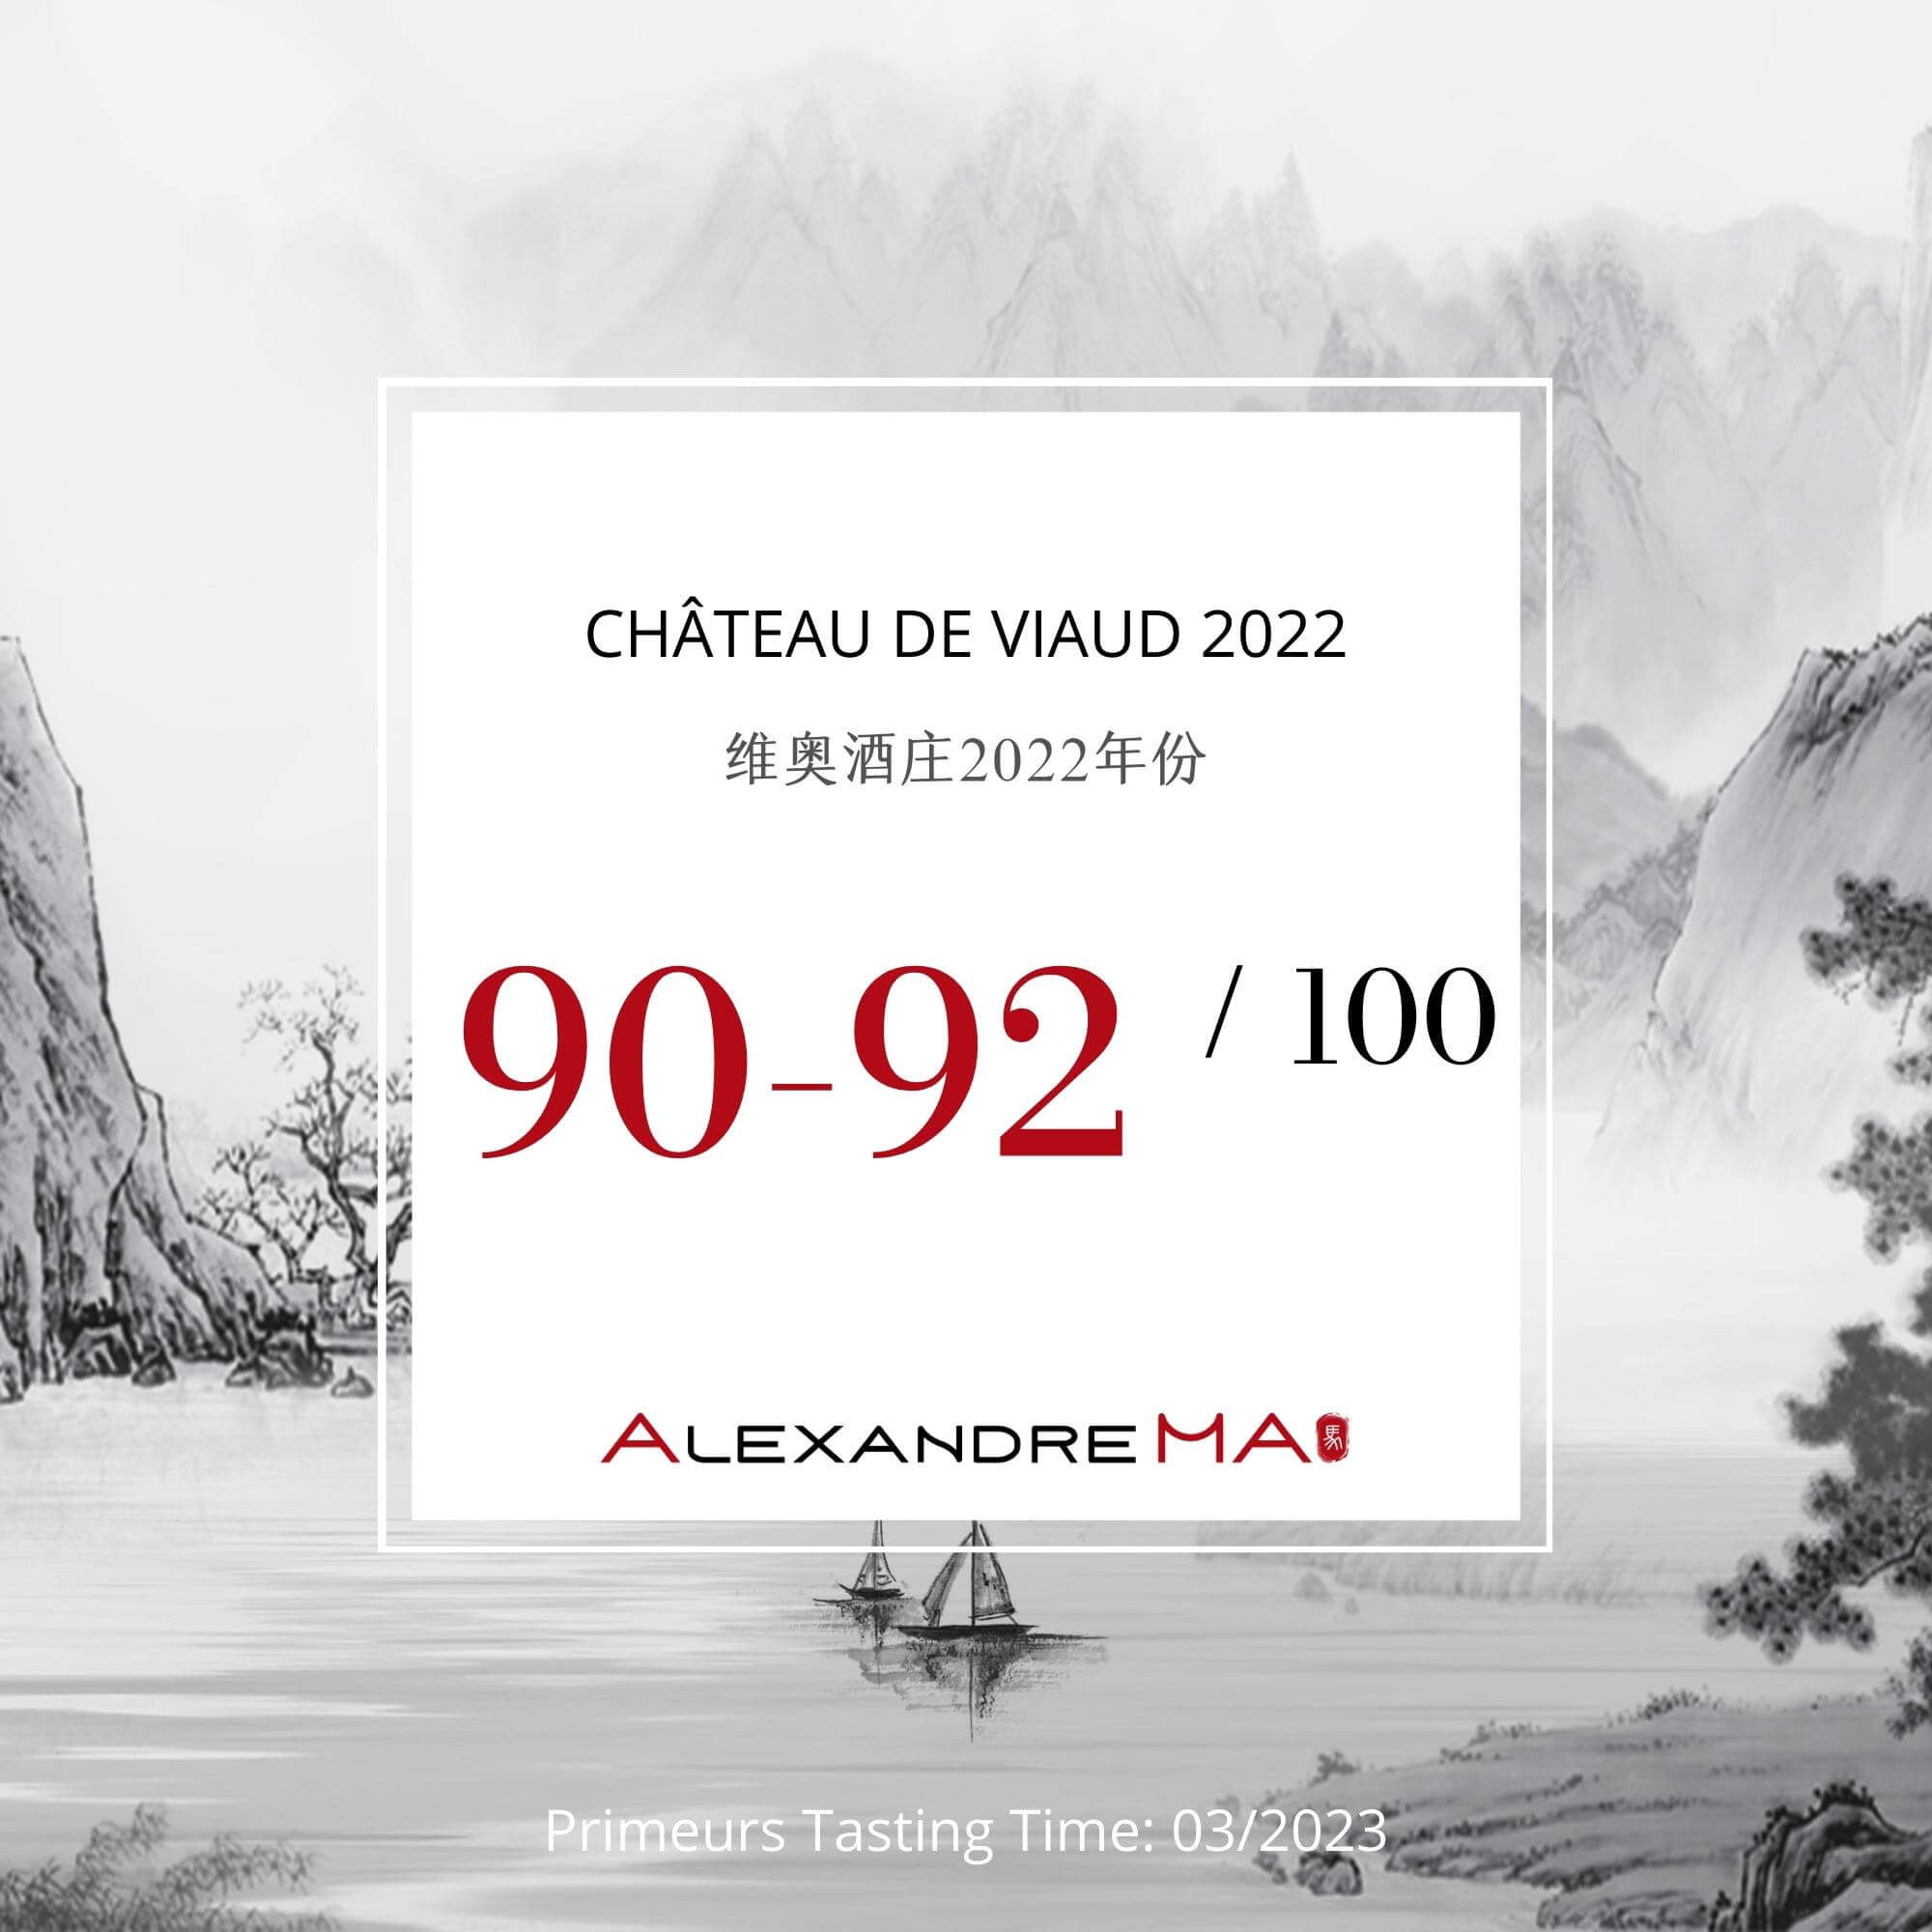 Château de Viaud 2022 Primeurs - Alexandre MA